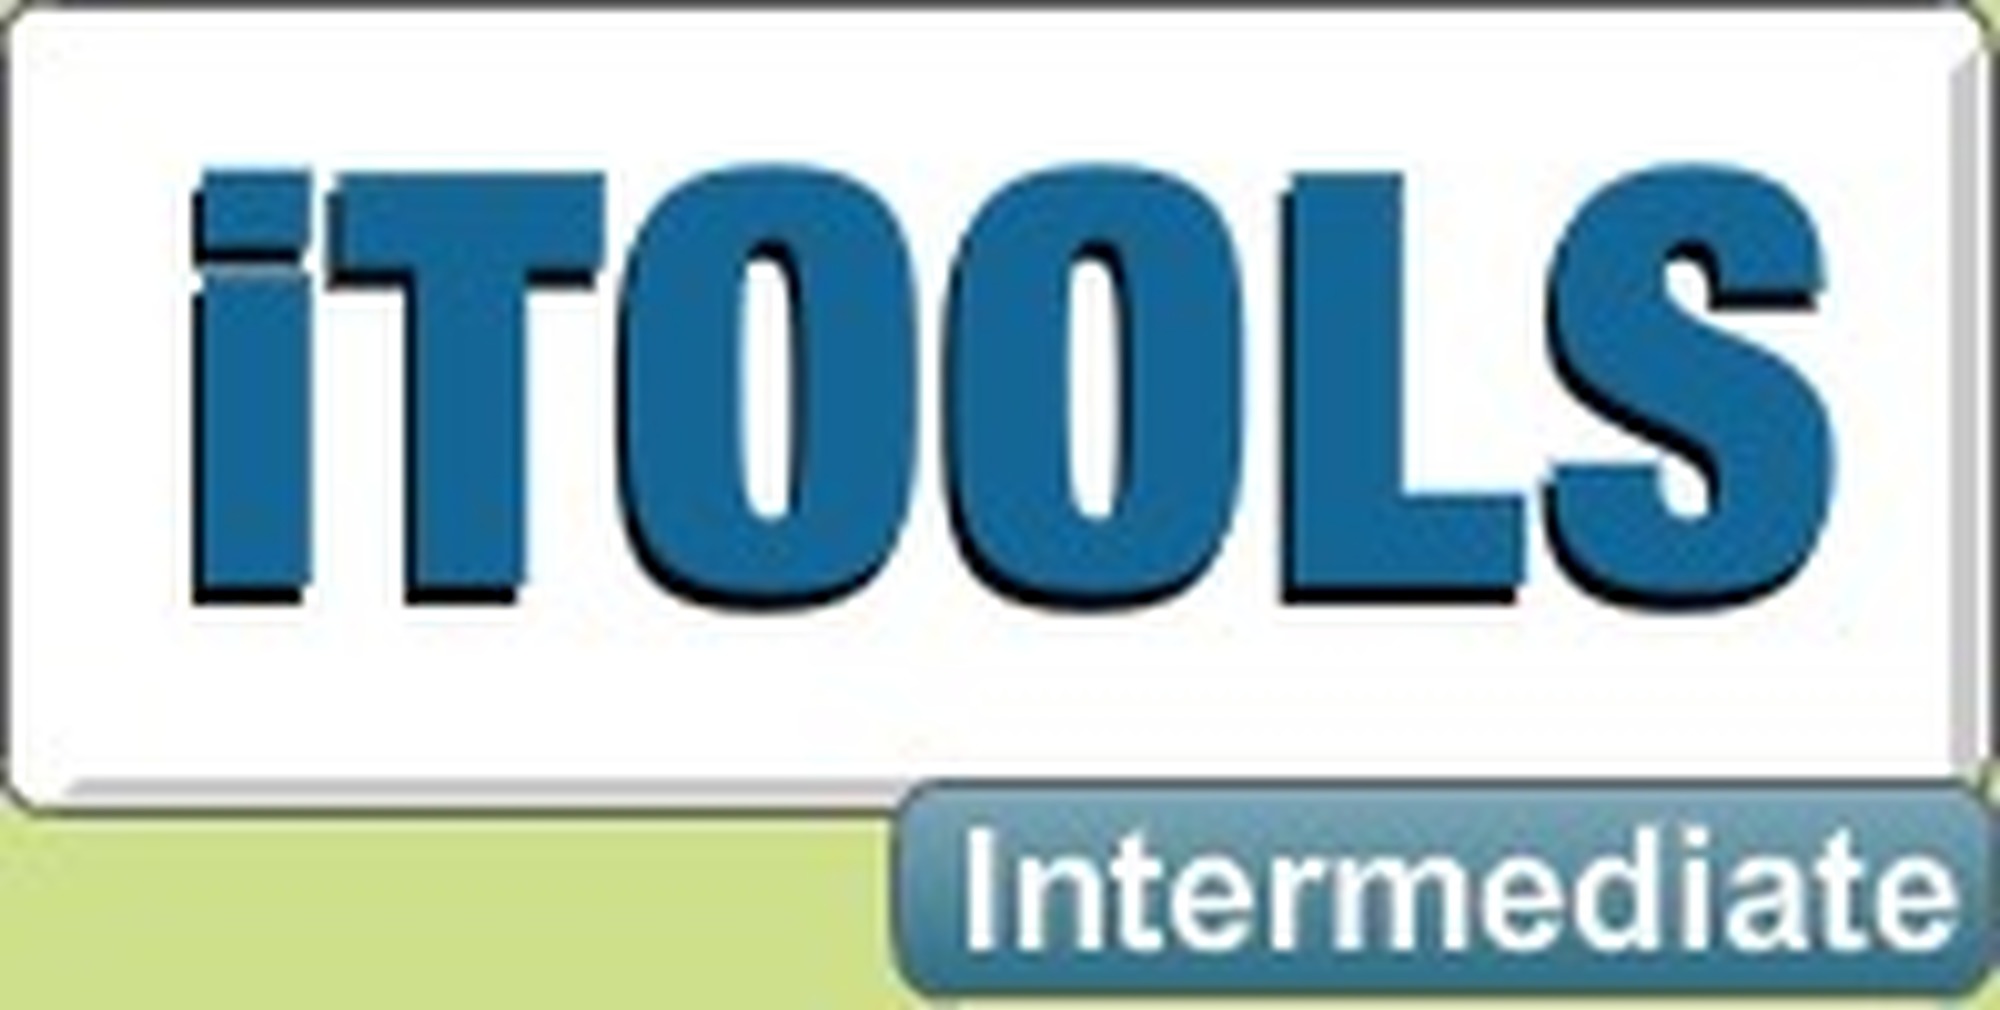 iTools Intermediate logo